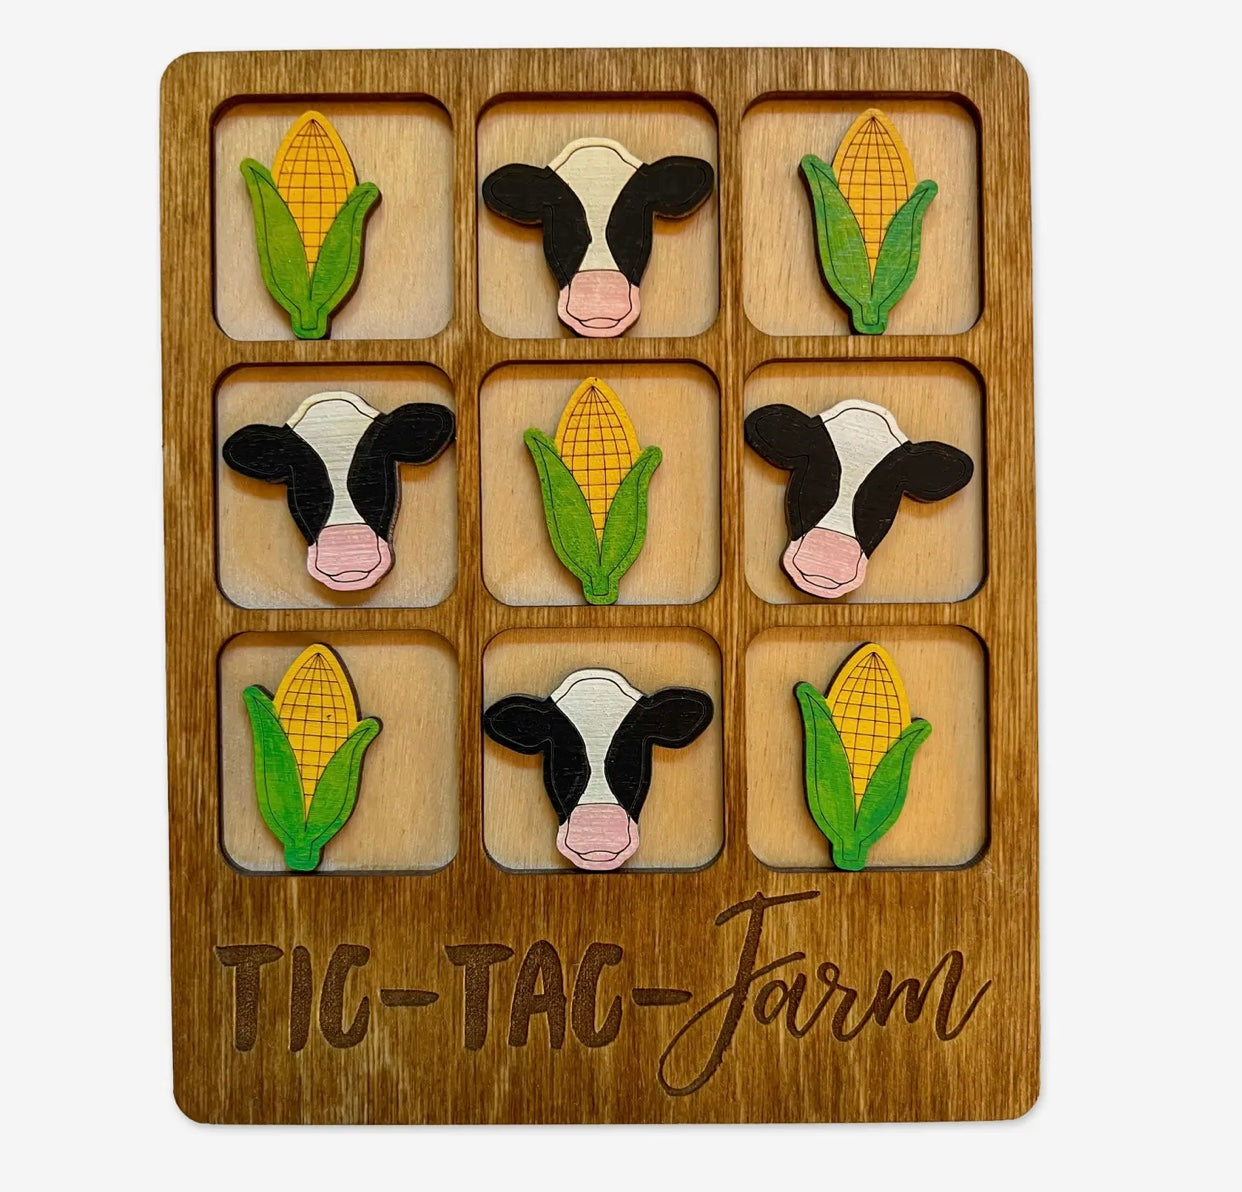 Tic-tac-toe Farm